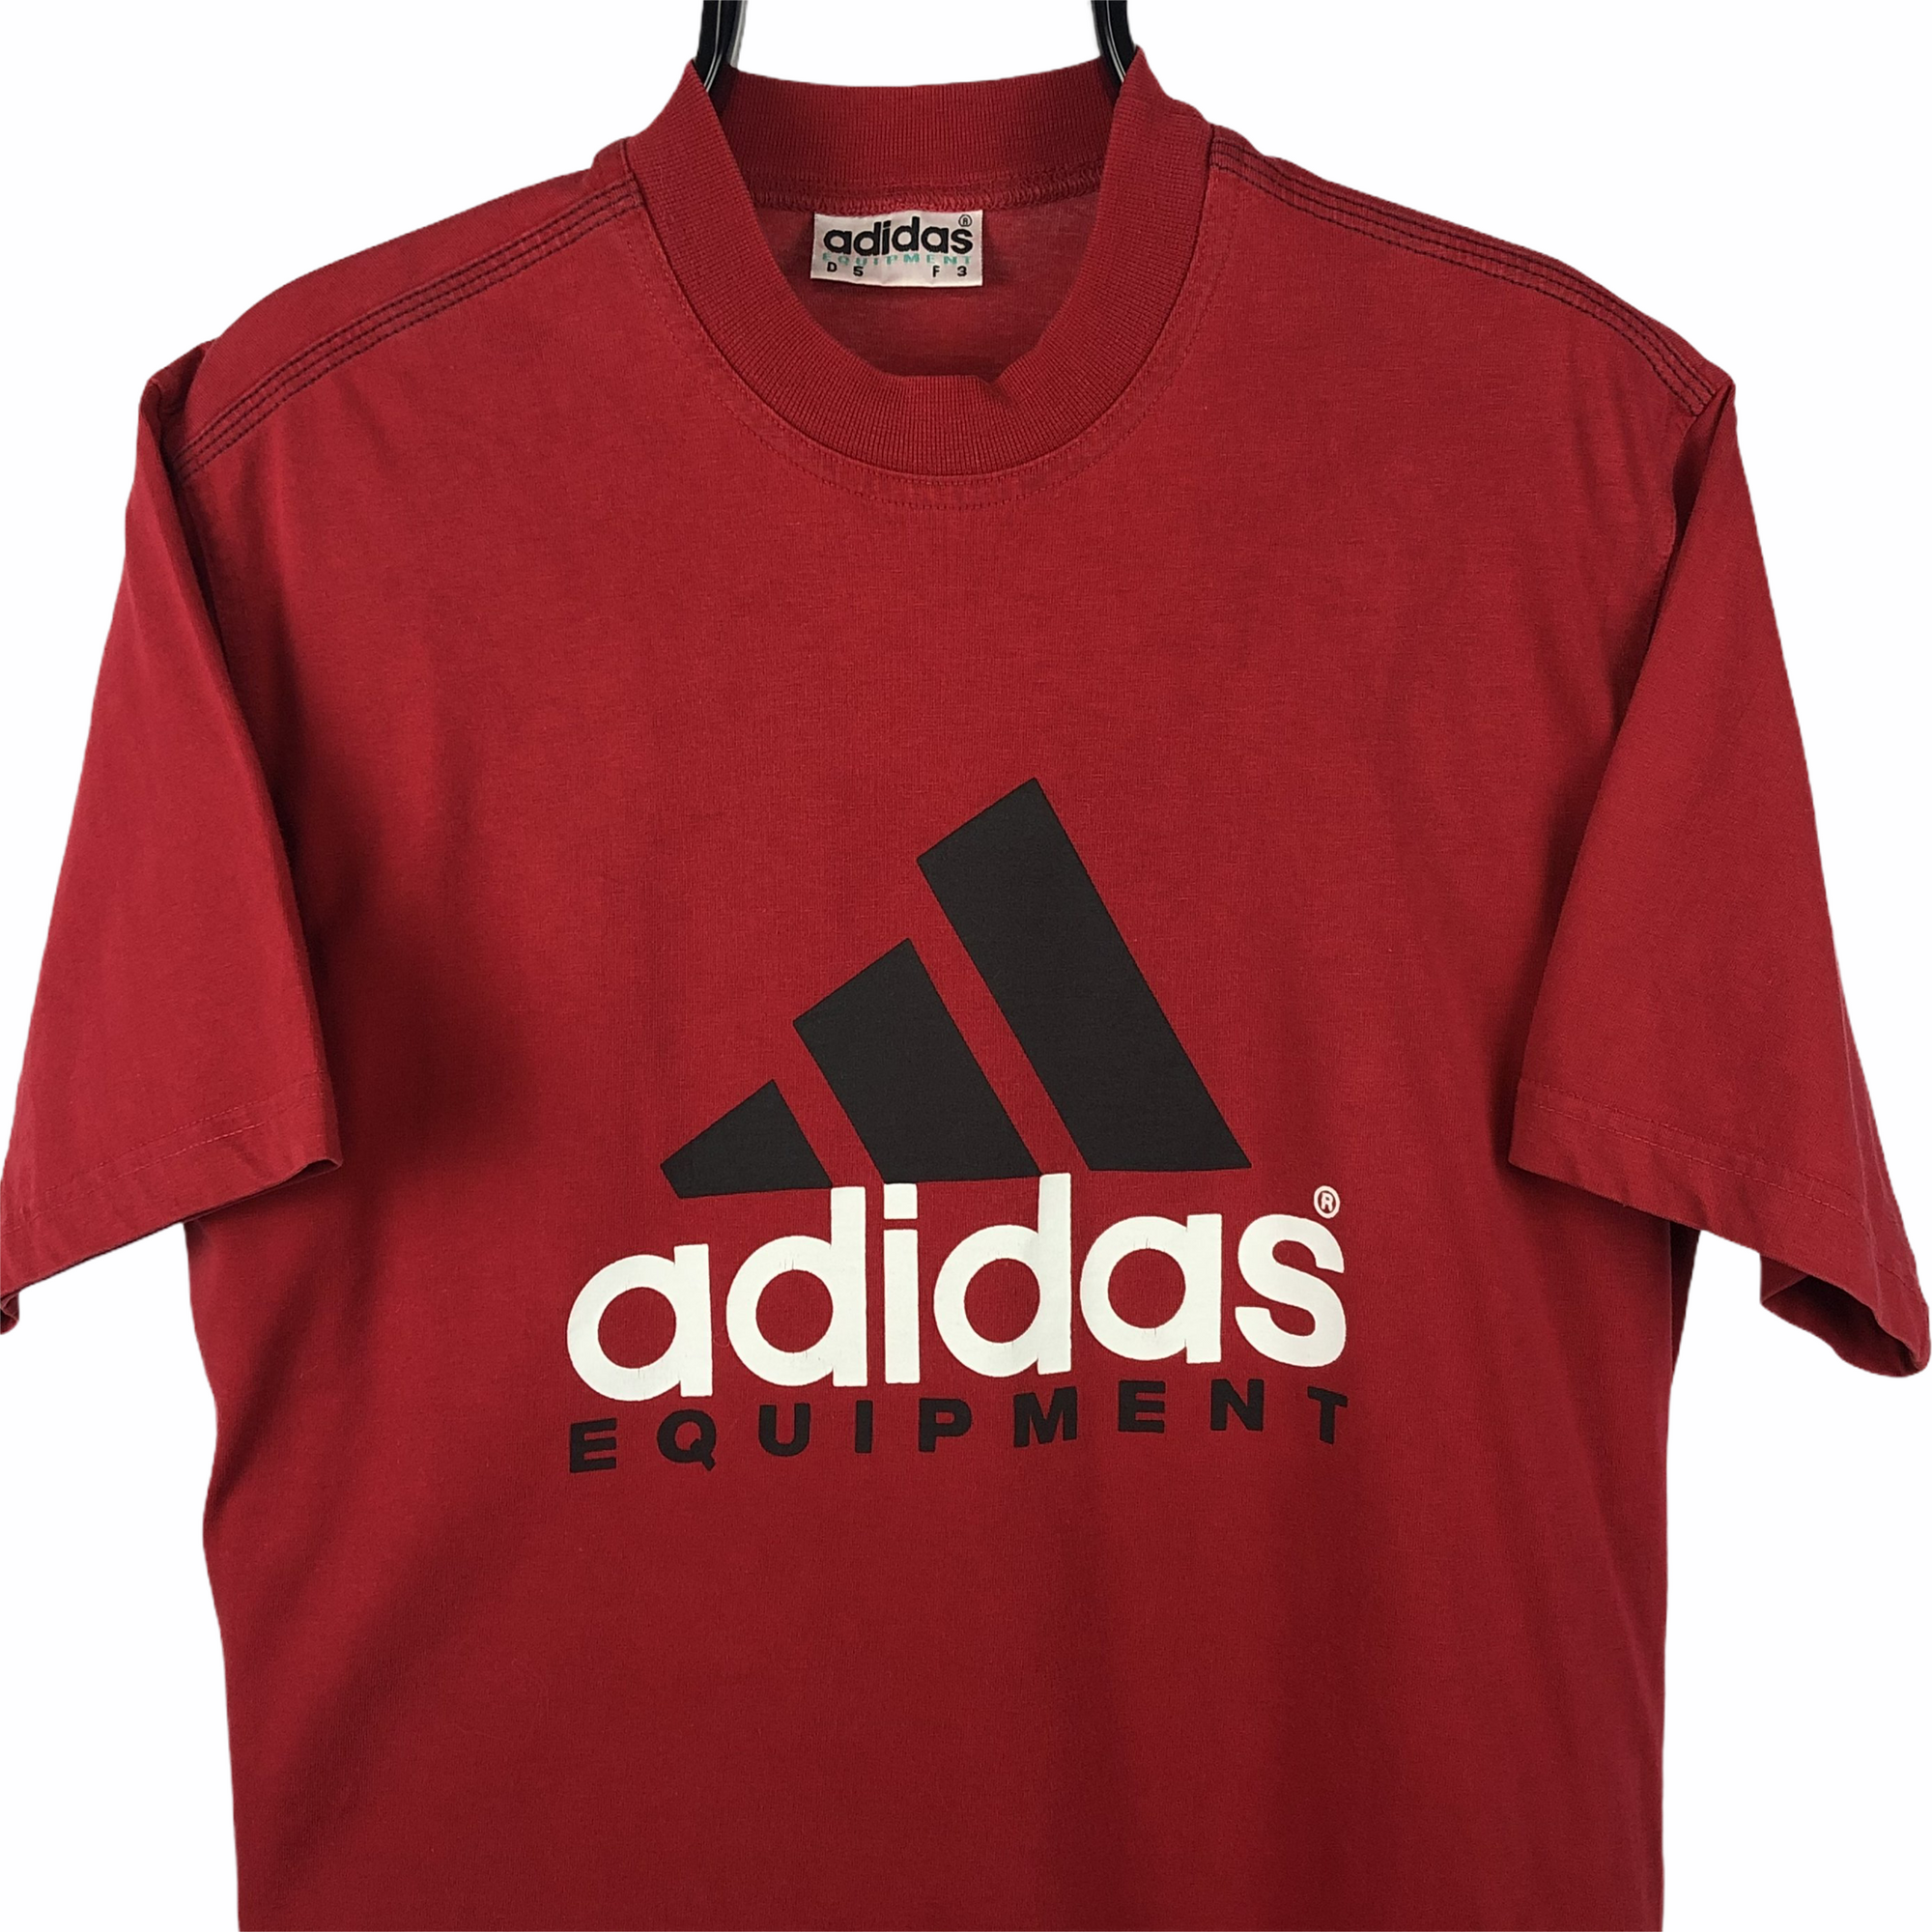 Vintage 90s Adidas Equipment Tee in Red - Men's Medium/Women's Large